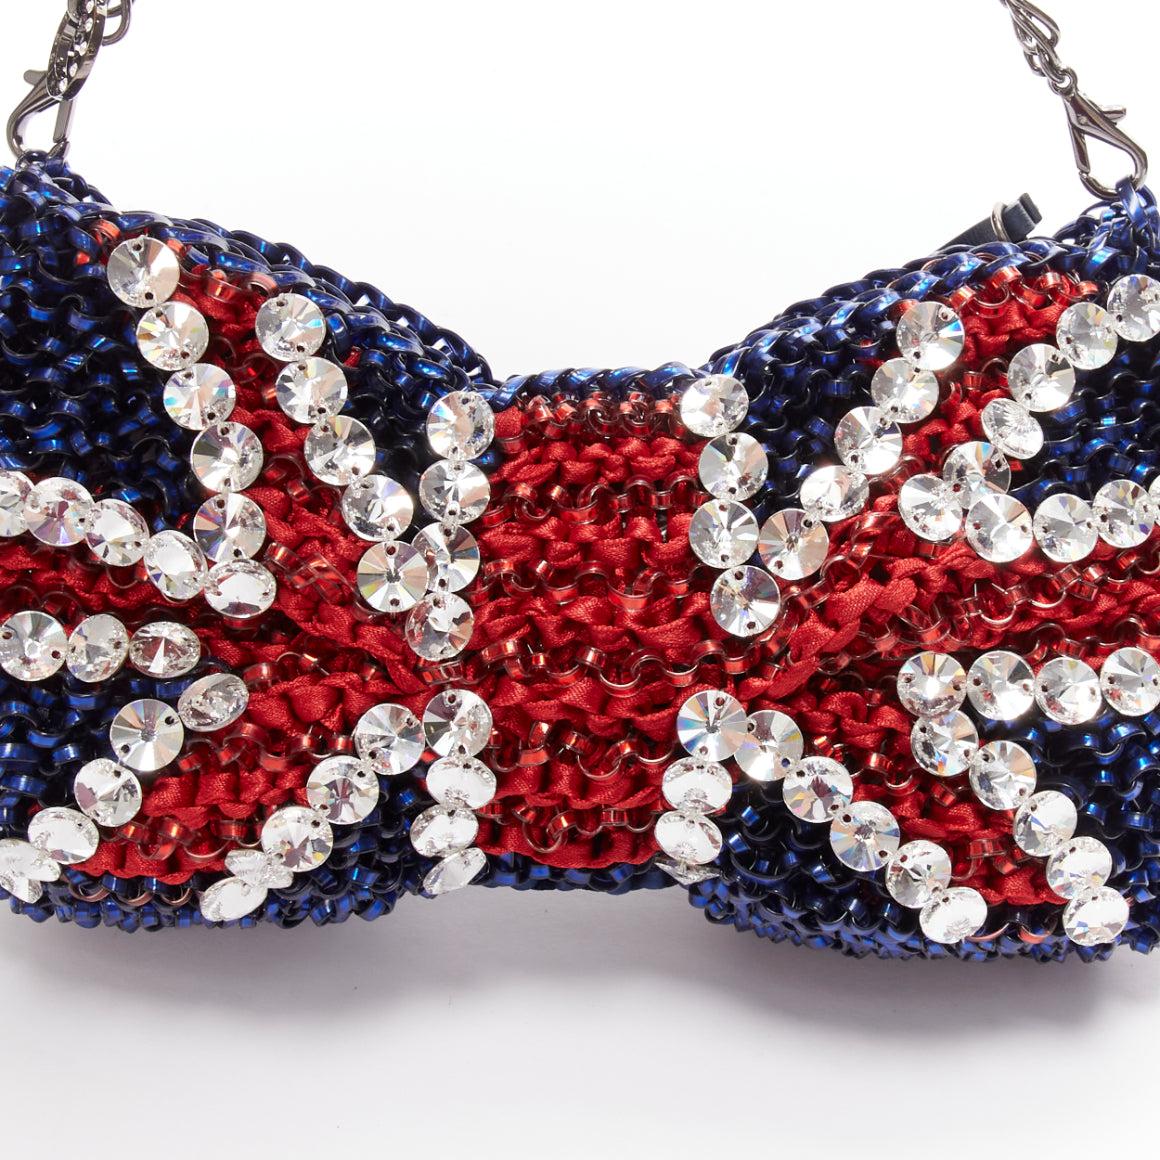 ANTEPRIMA Wire Bag British Union Jack crystal embellished bow clutch 4